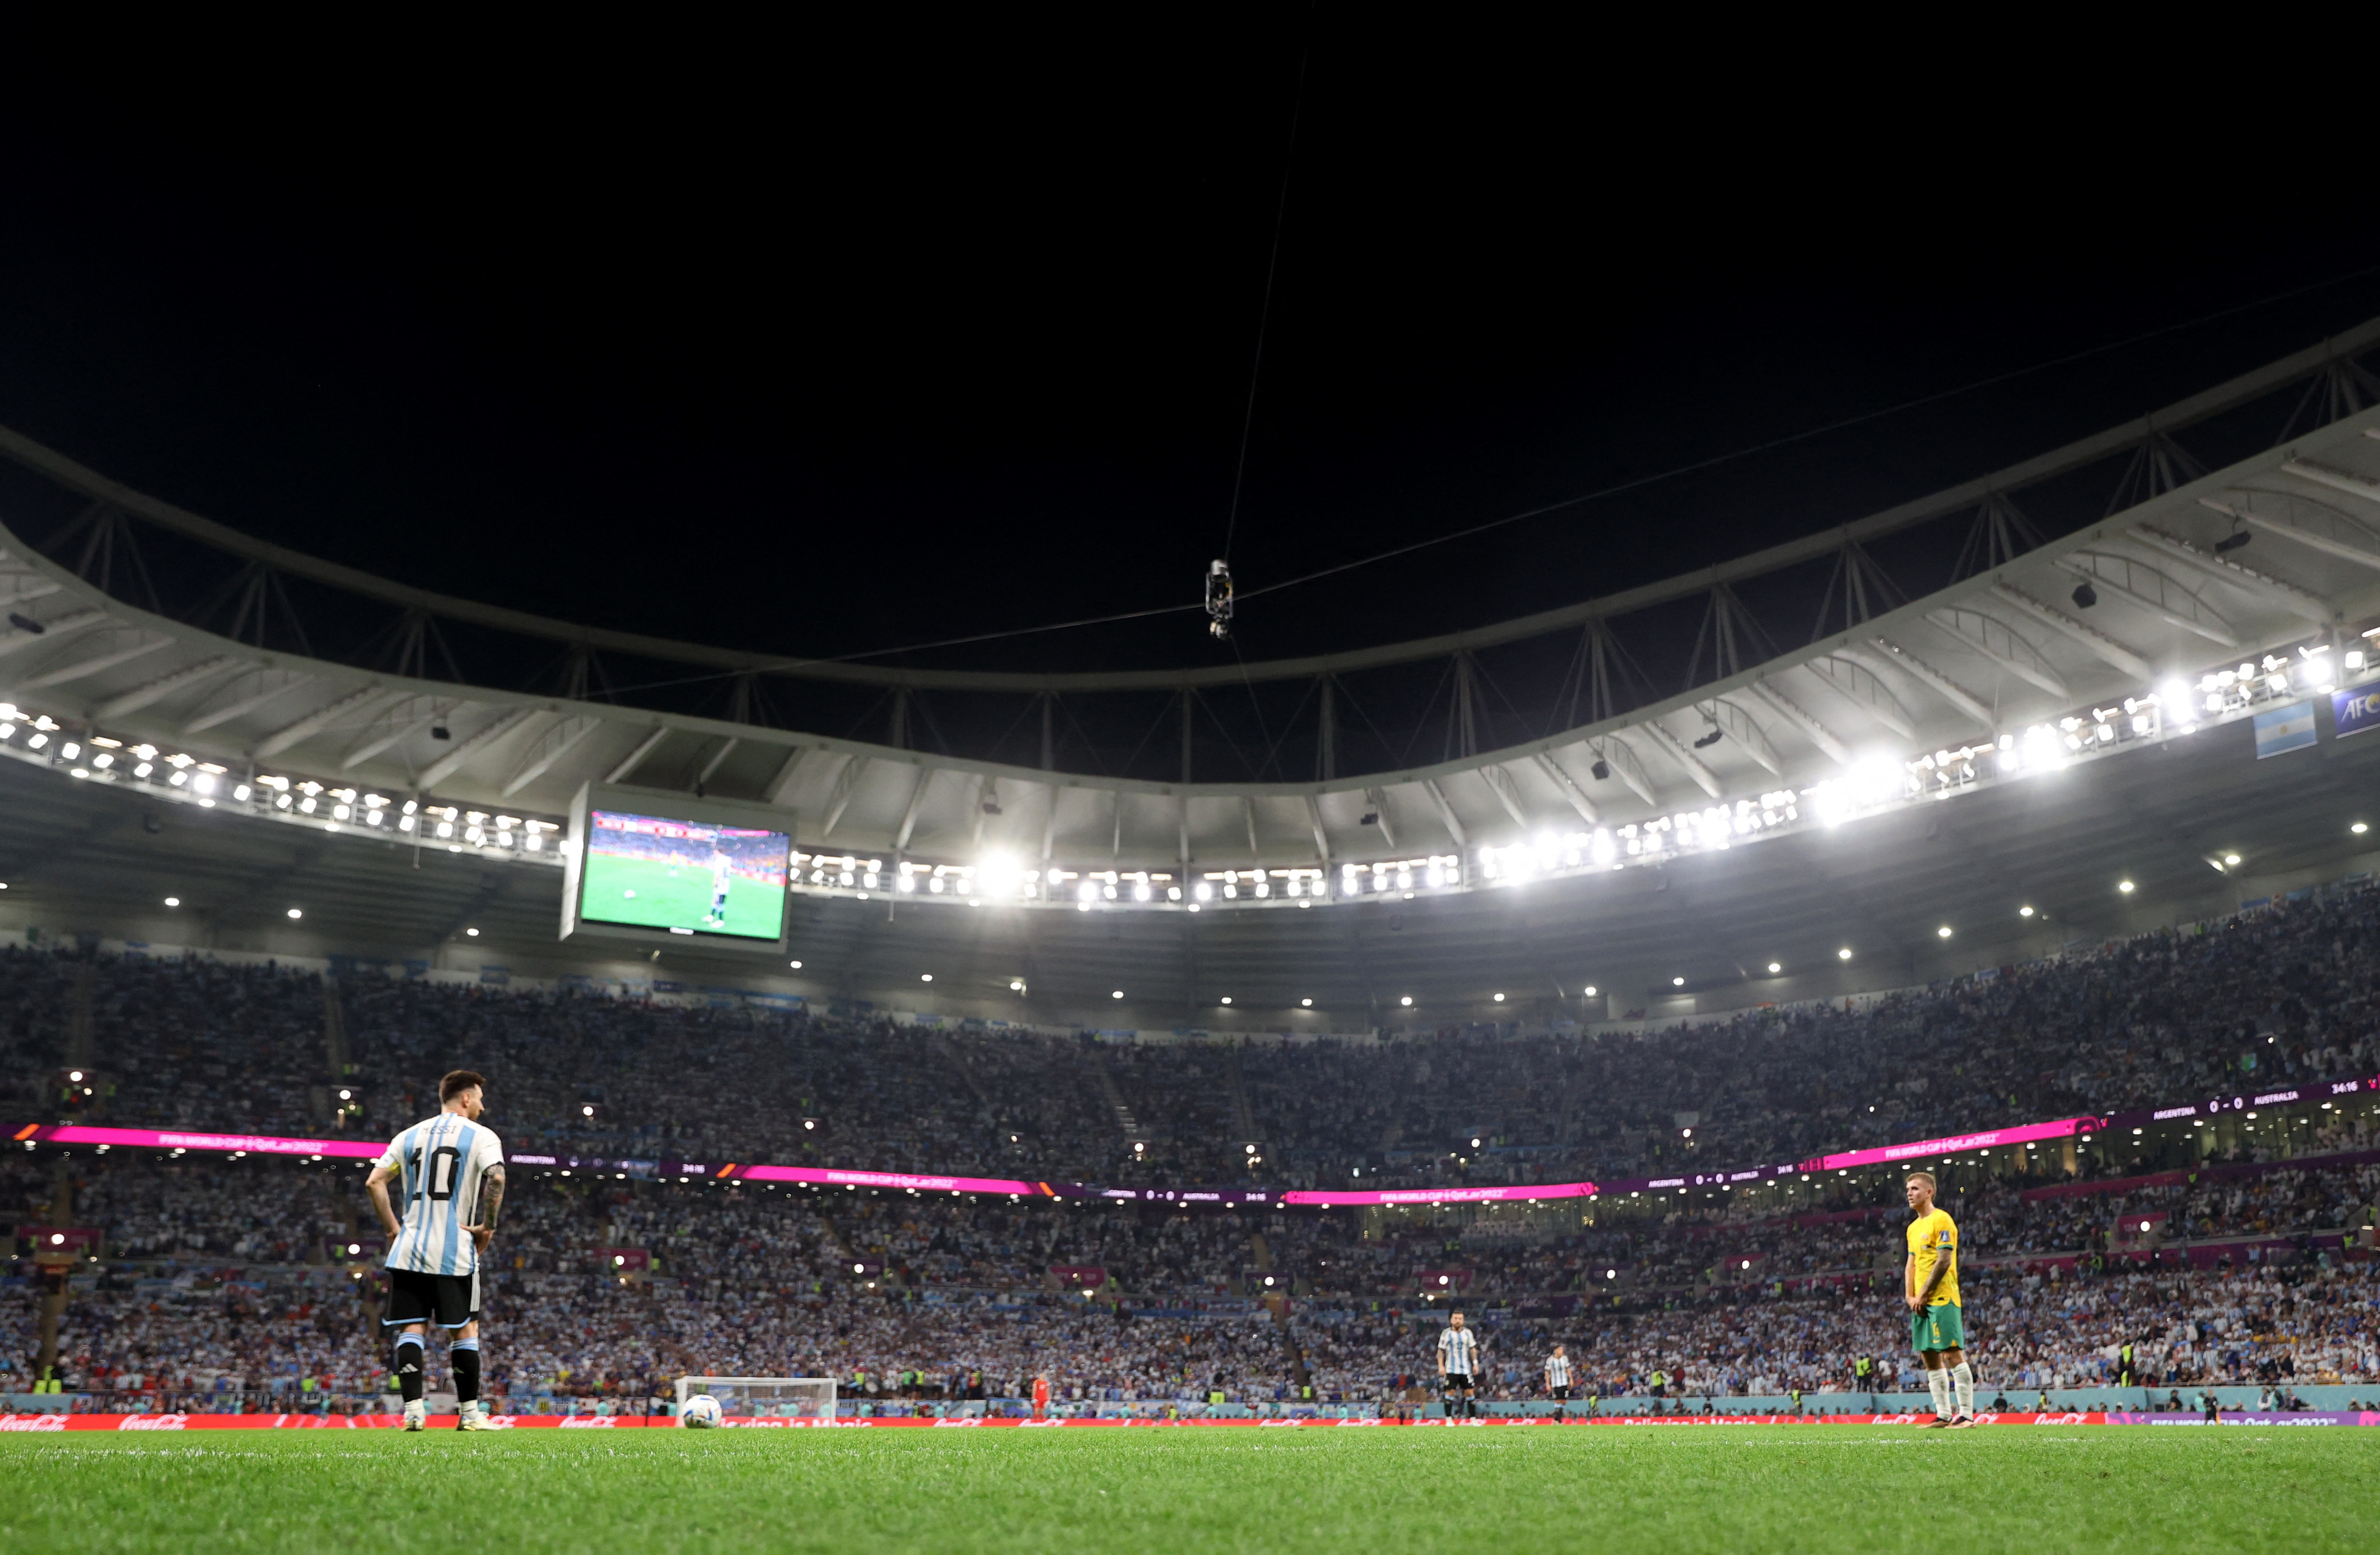 Messi se dispone a ejecutar el tiro libre que dio inicio a la jugada (REUTERS/Carl Recine)